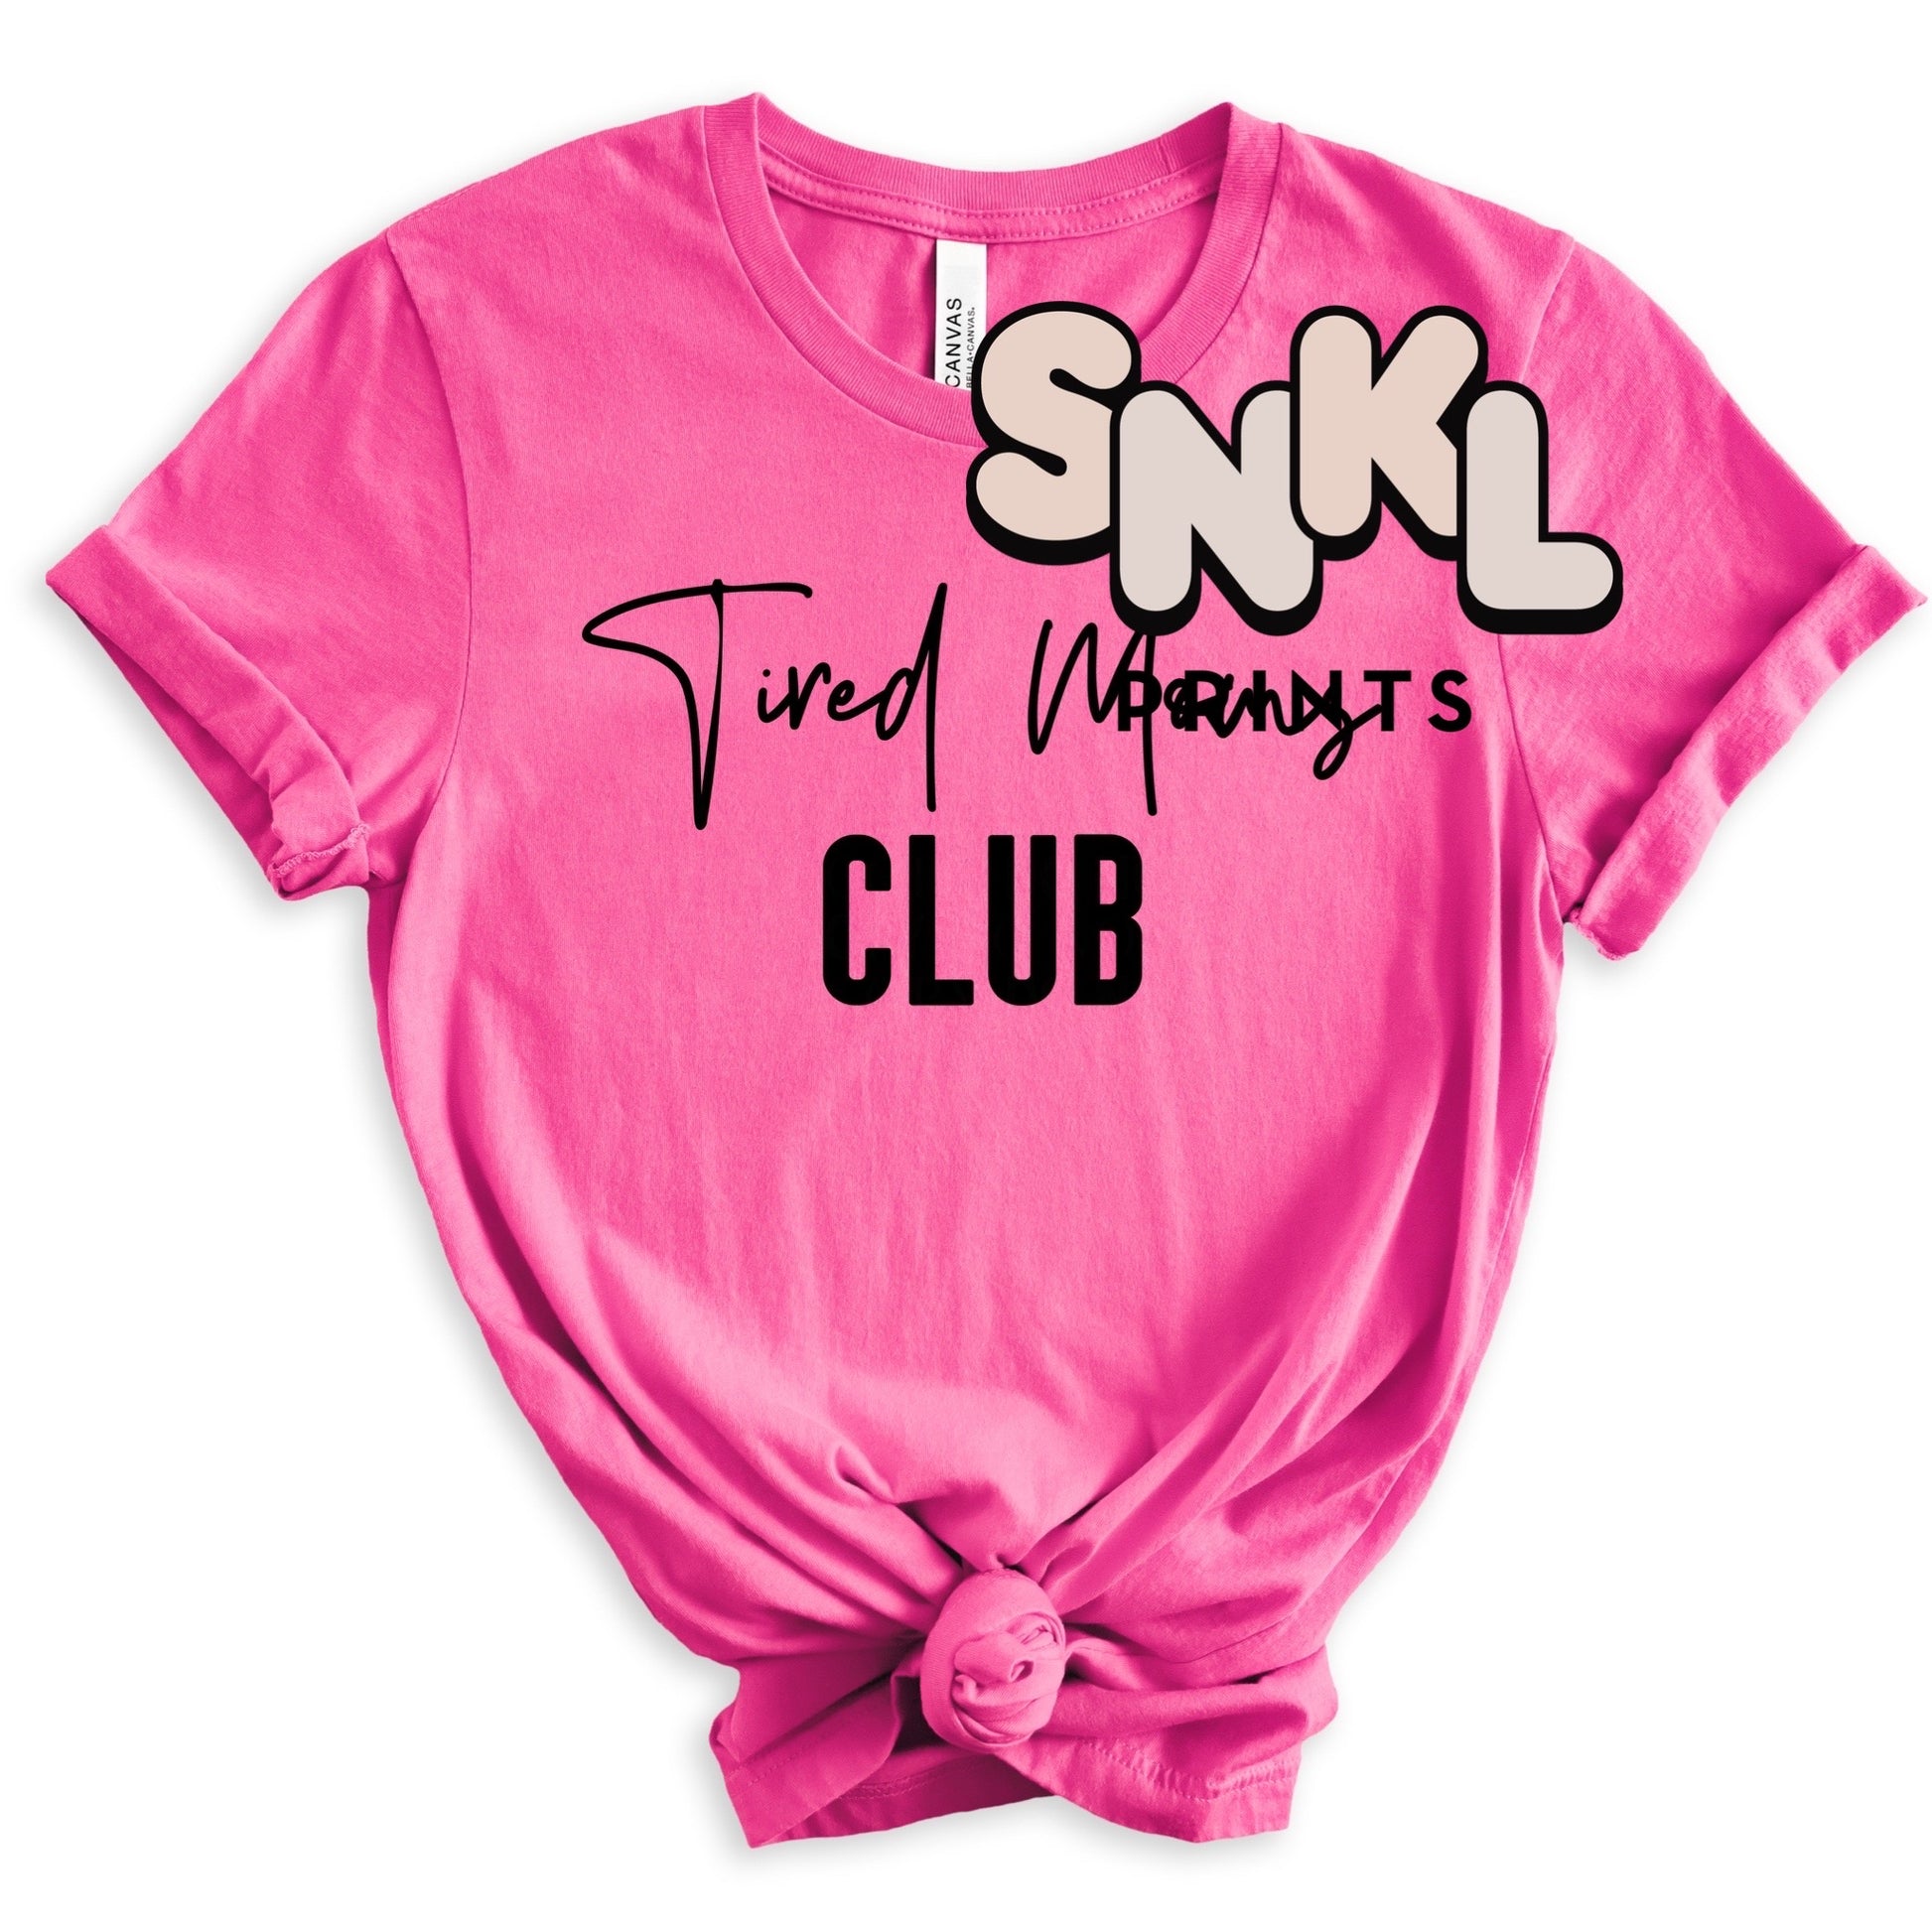 Tired Moms Club - SNKL Prints